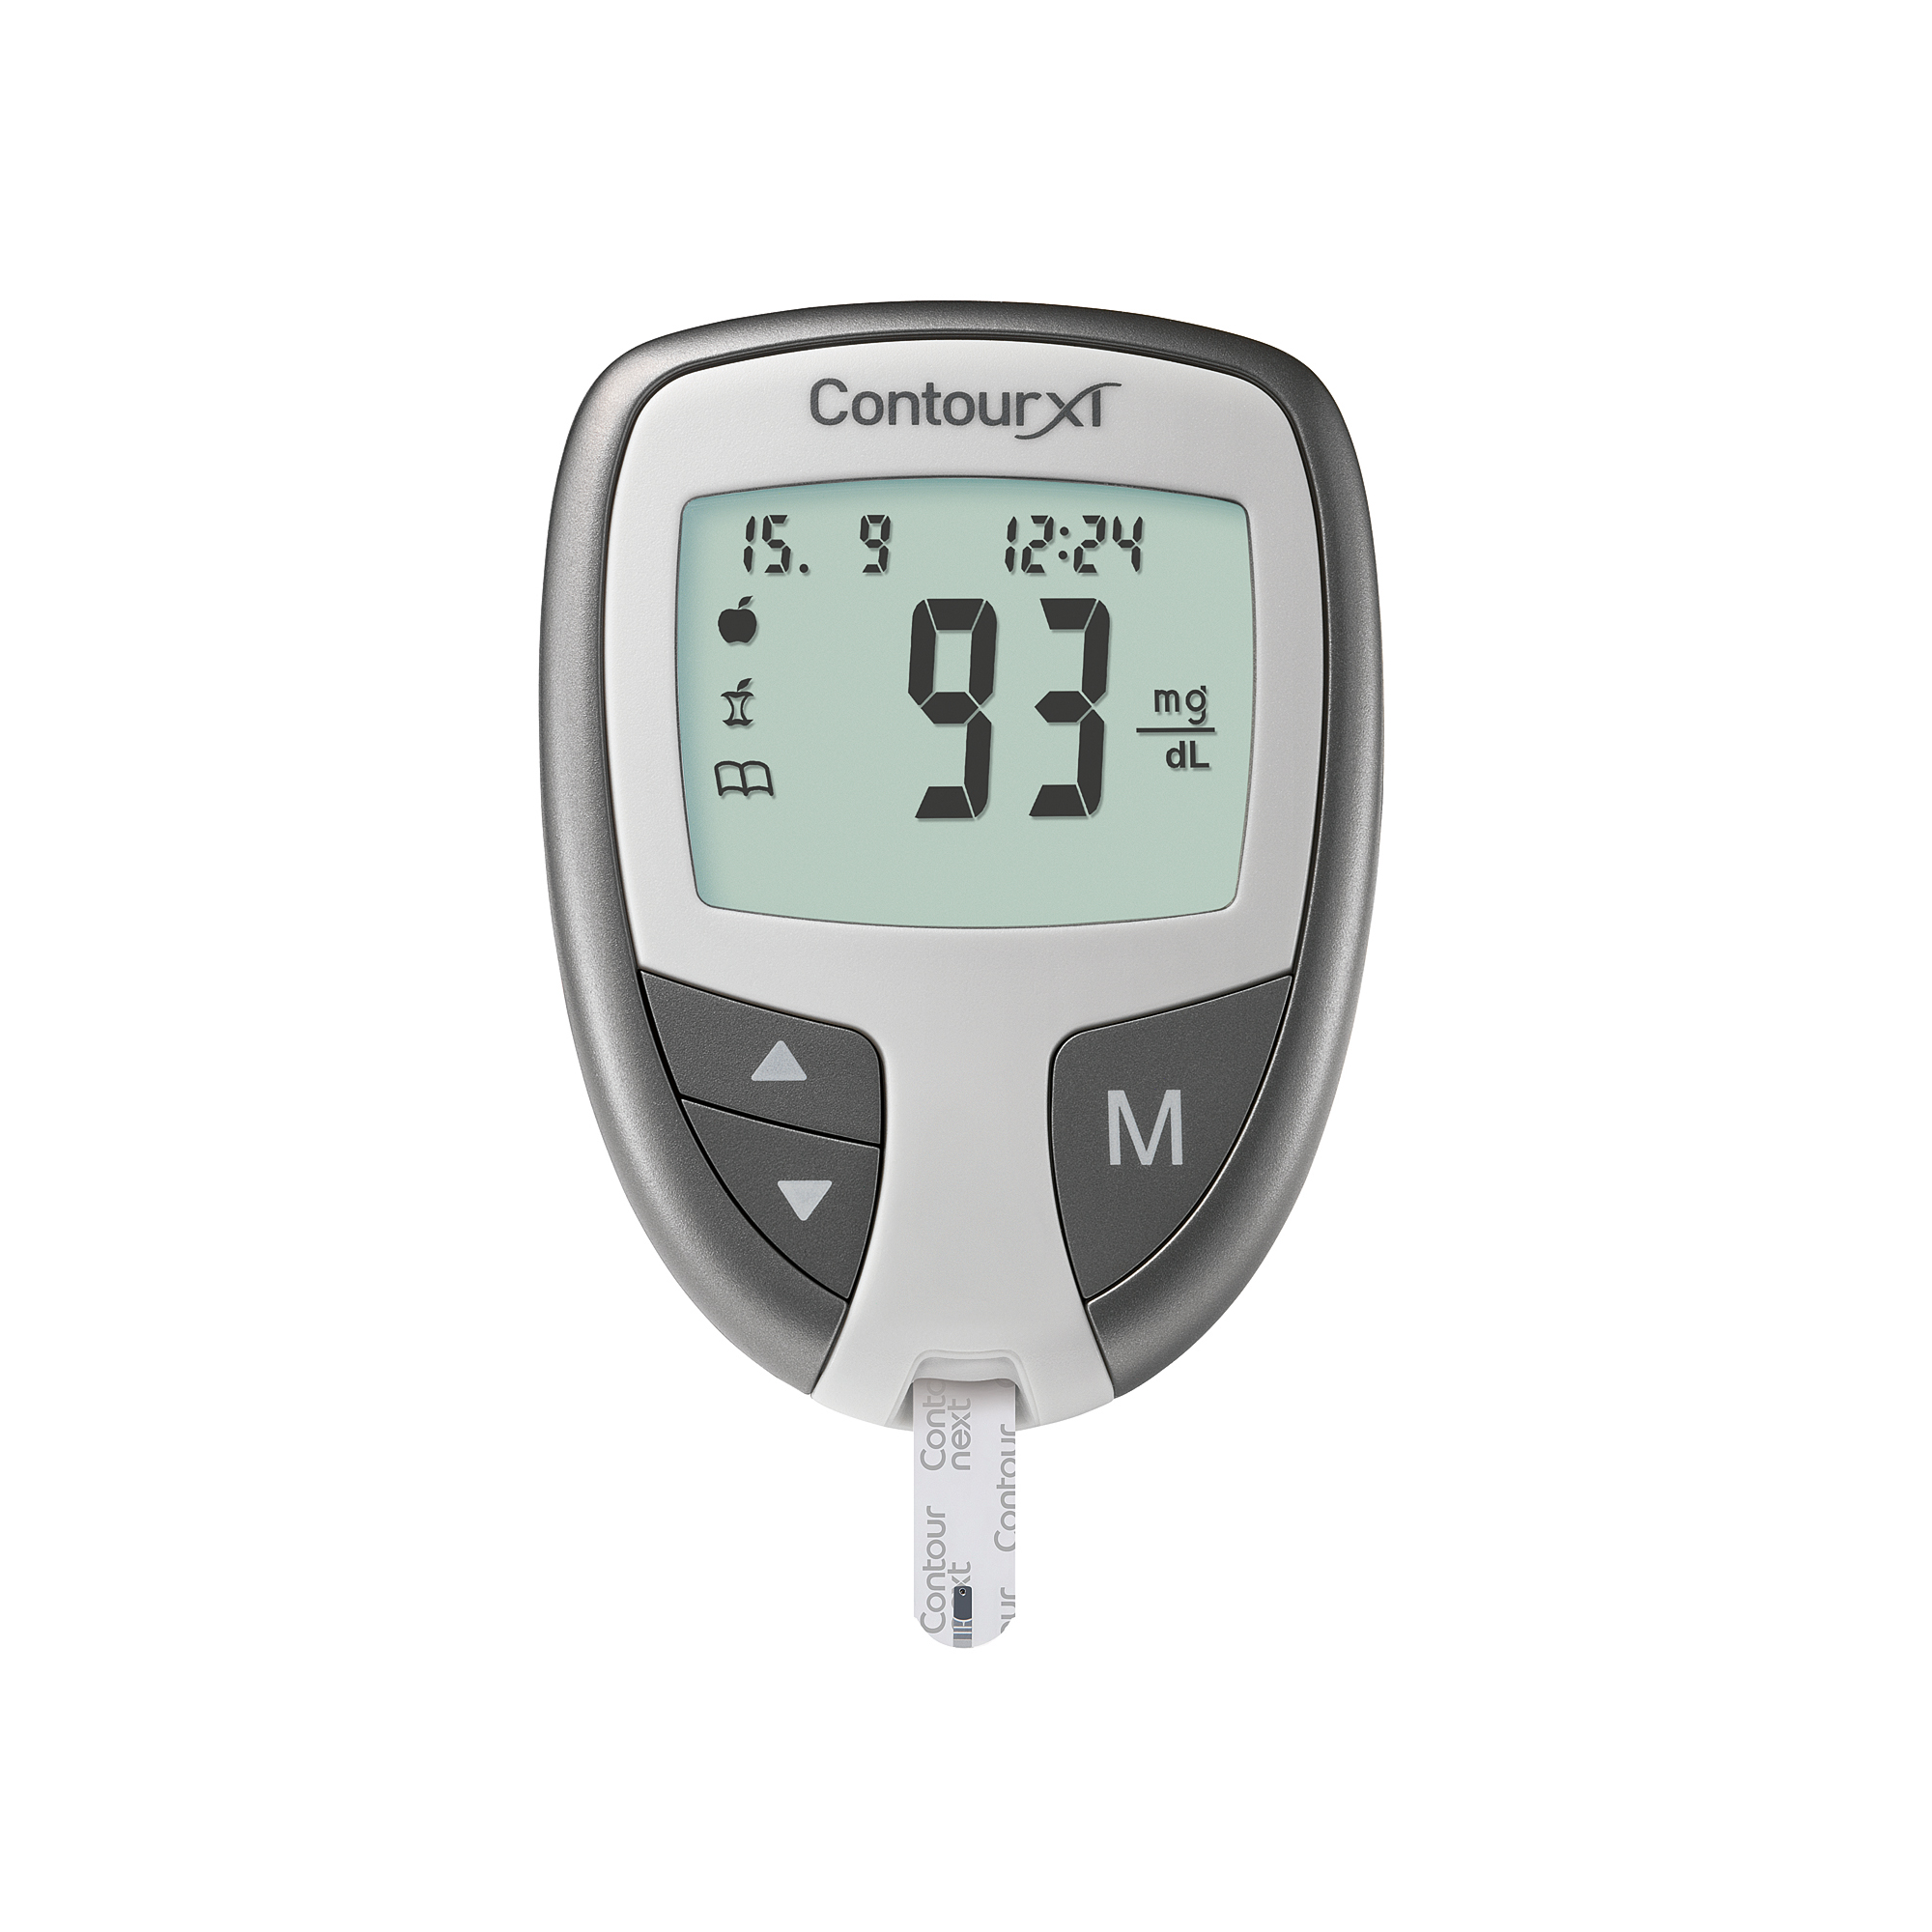 Bayer blood glucose meter CONTOUR® XT, large display, mg / dl, 1 Set